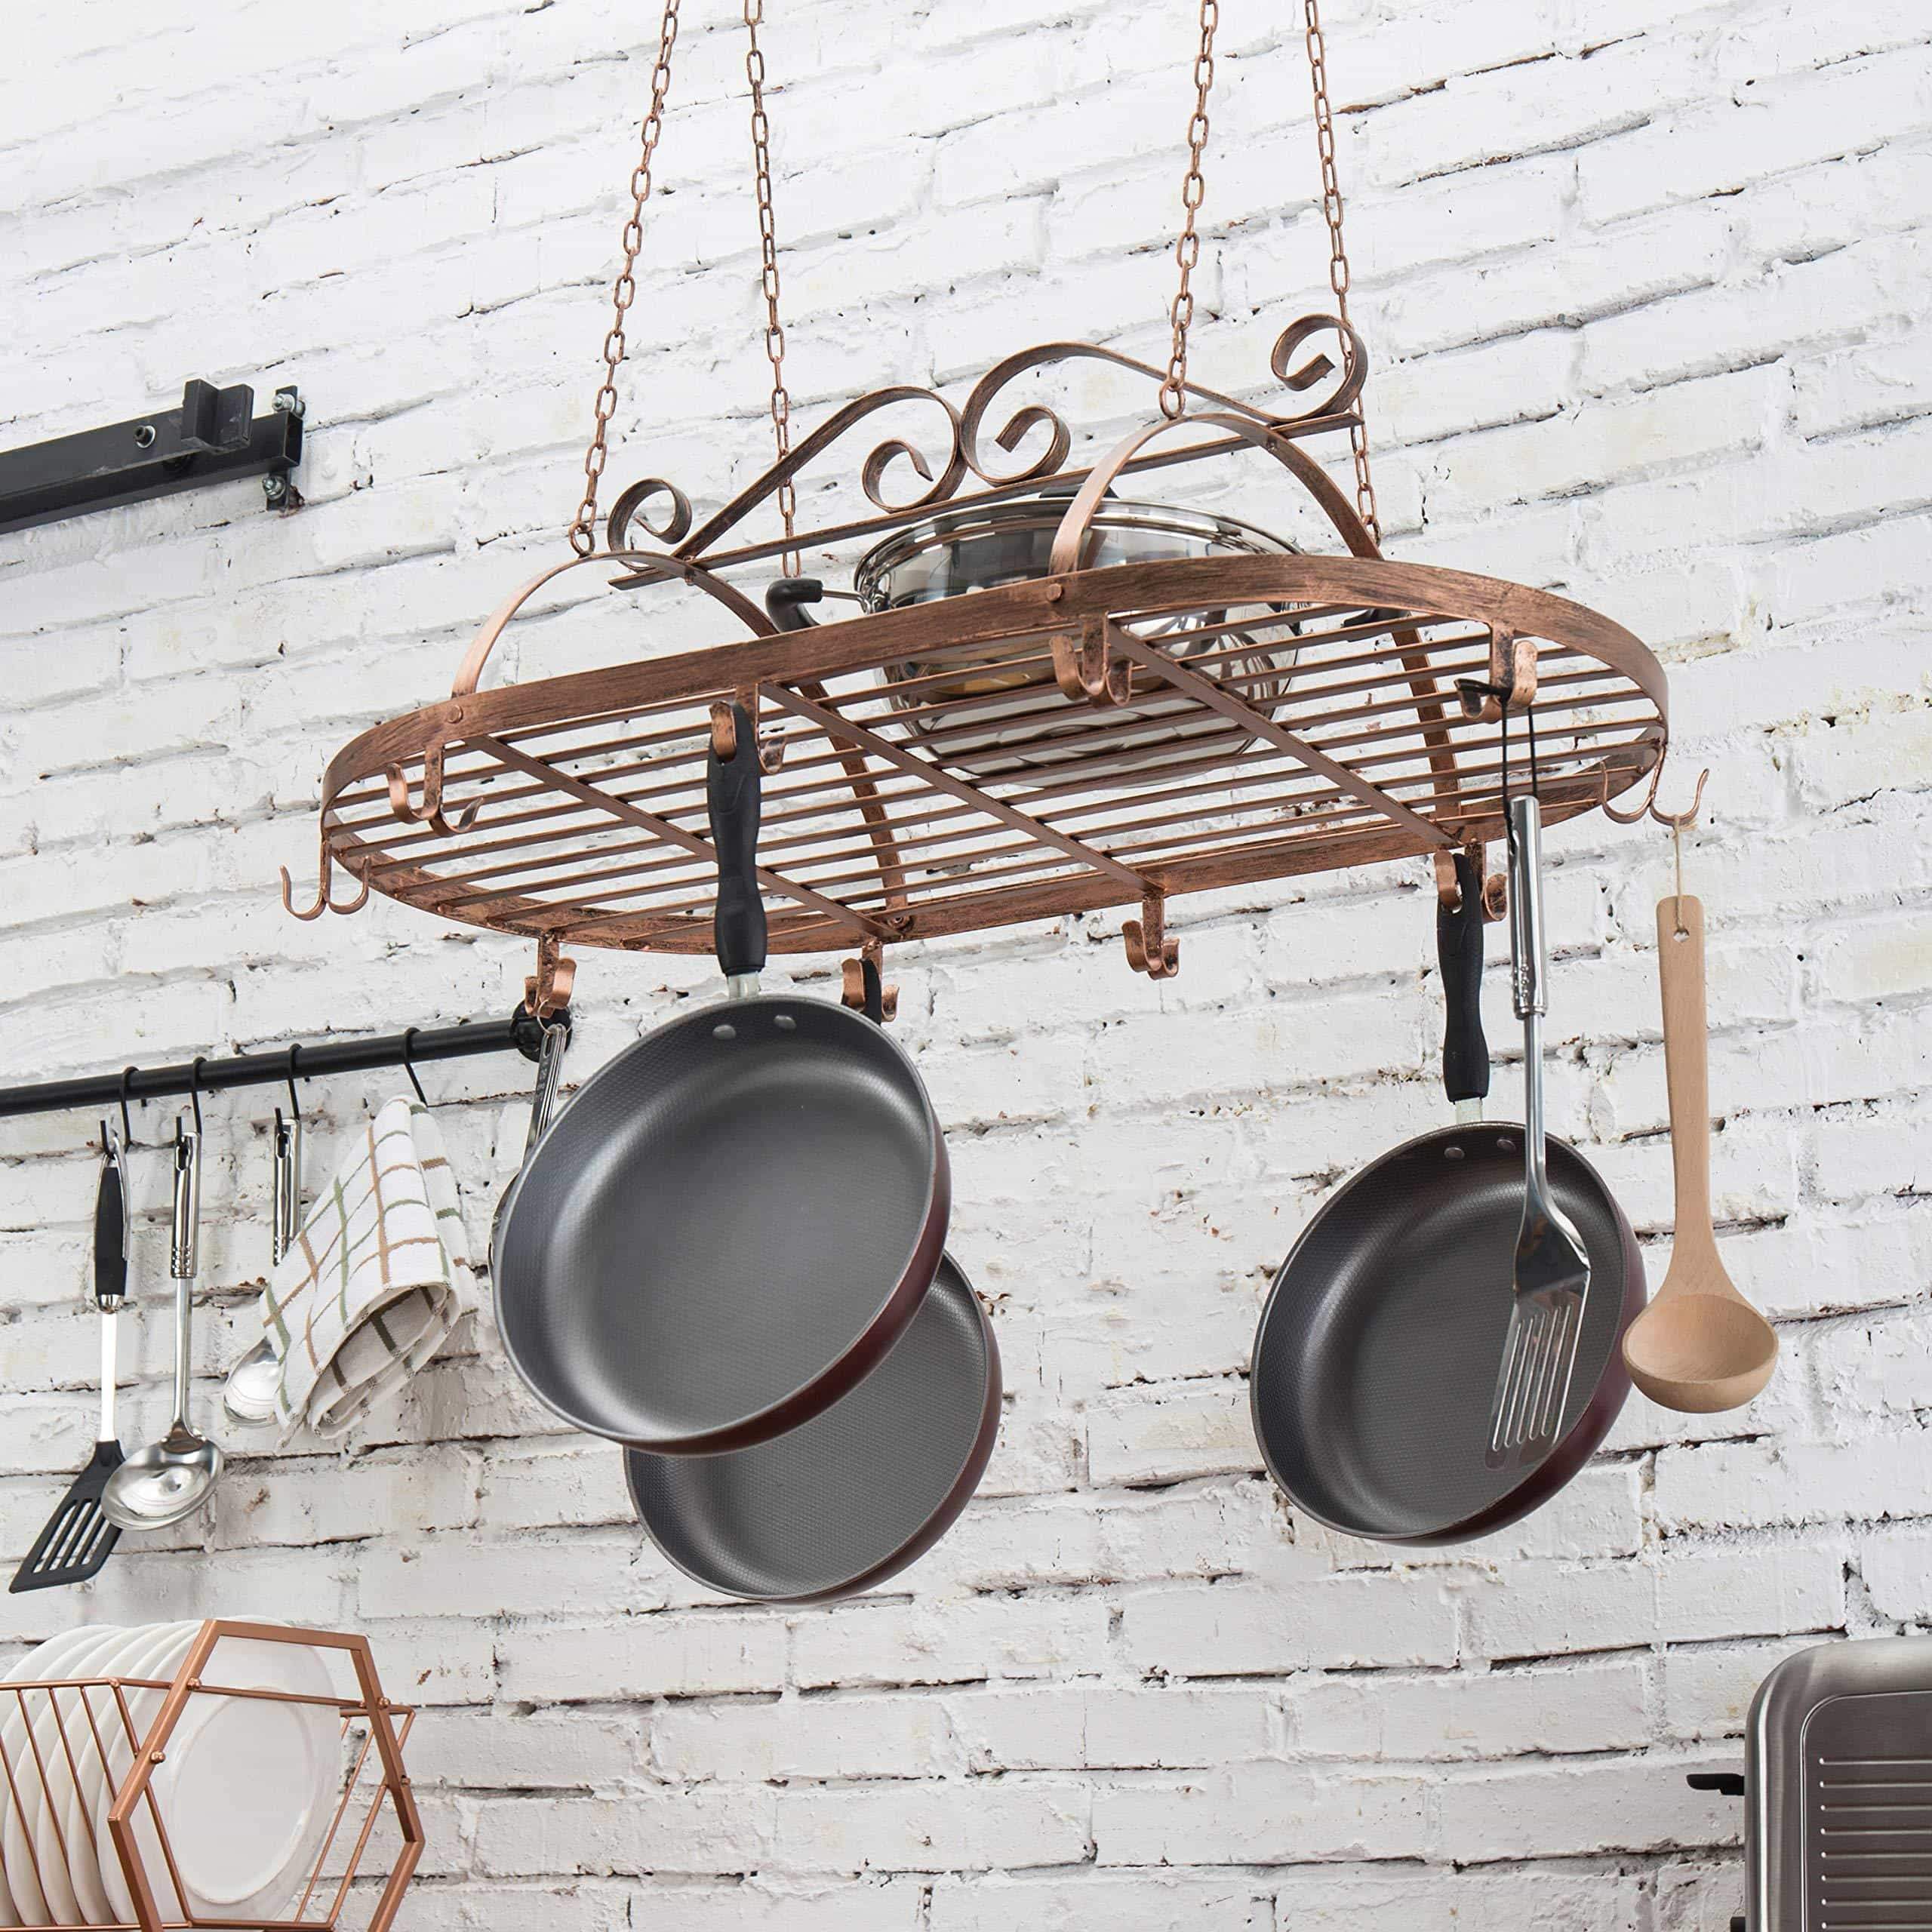 Exclusive bronze tone scrollwork metal ceiling mounted hanging rack for kitchen utensils pots pans holder